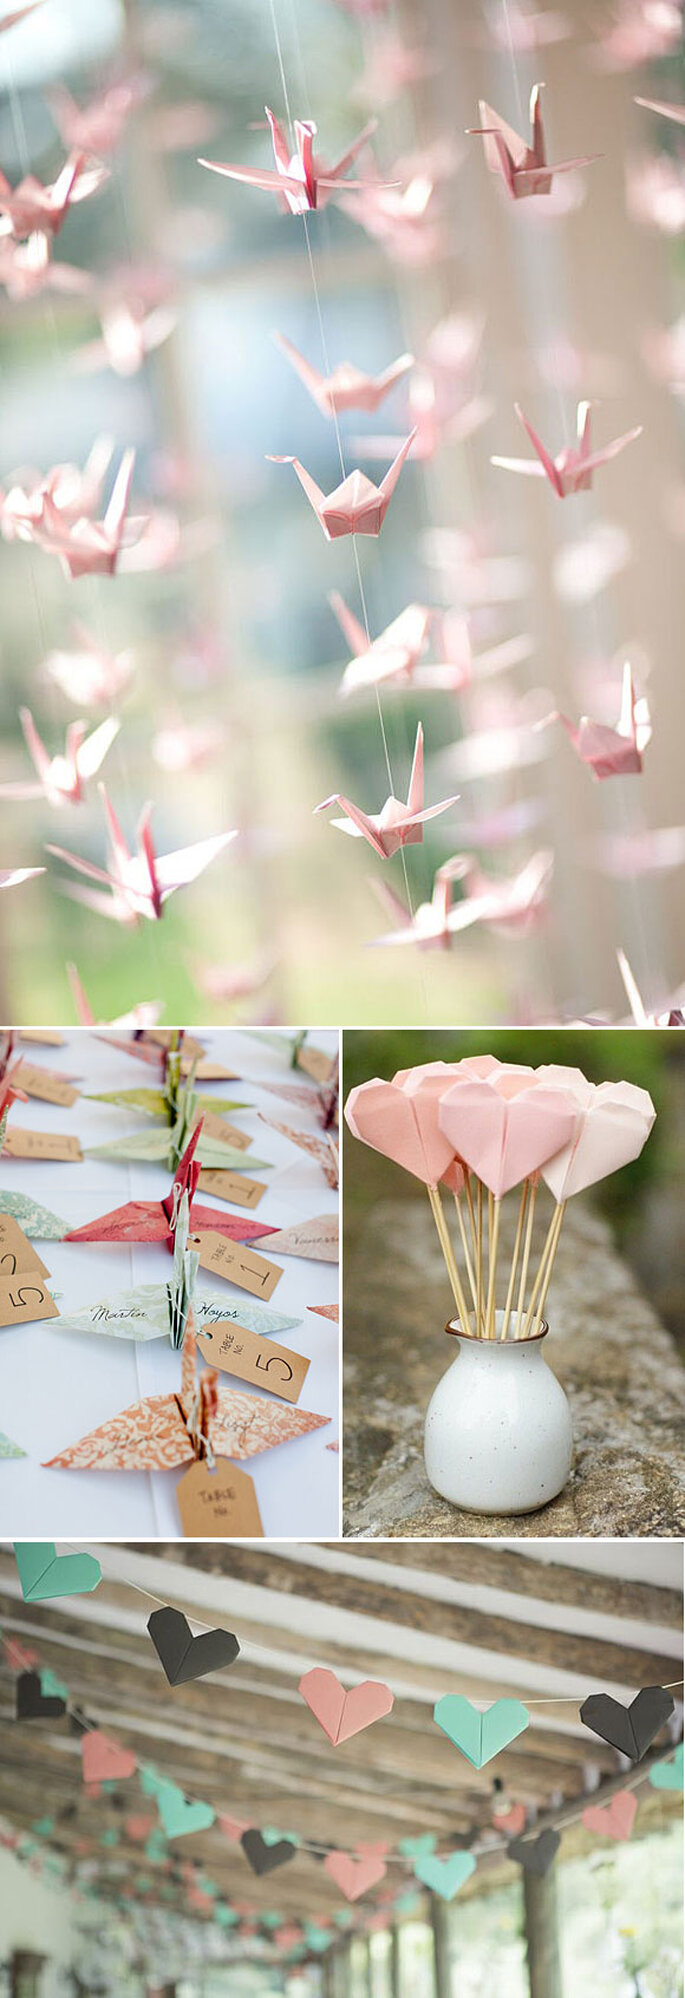 decoracion-bodas-con-origami